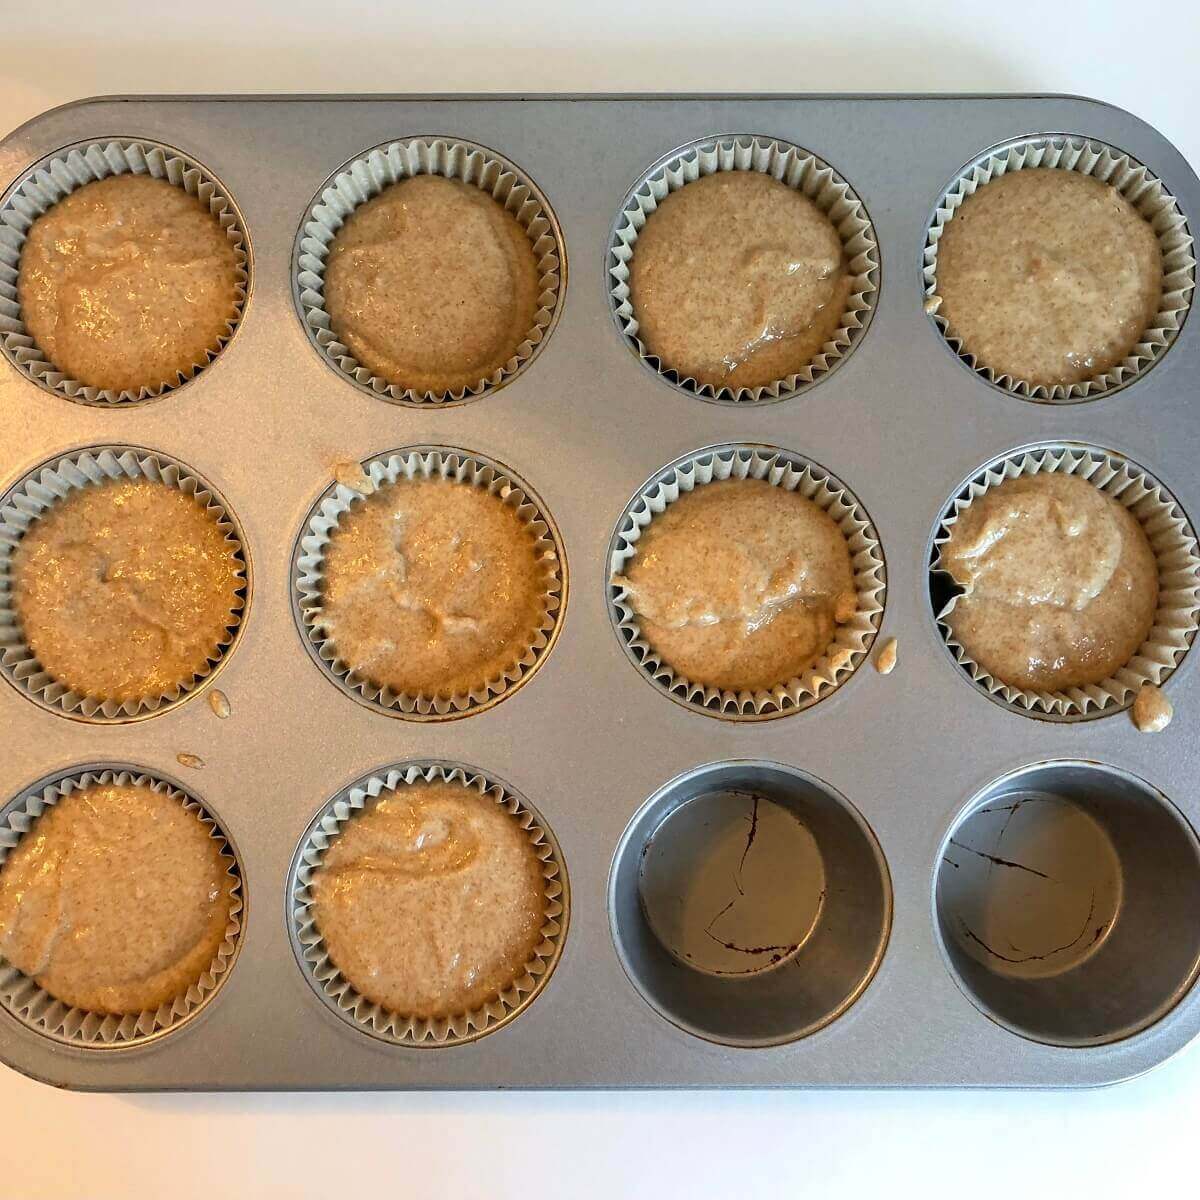 Ten raw spelt muffins in a baking pan.